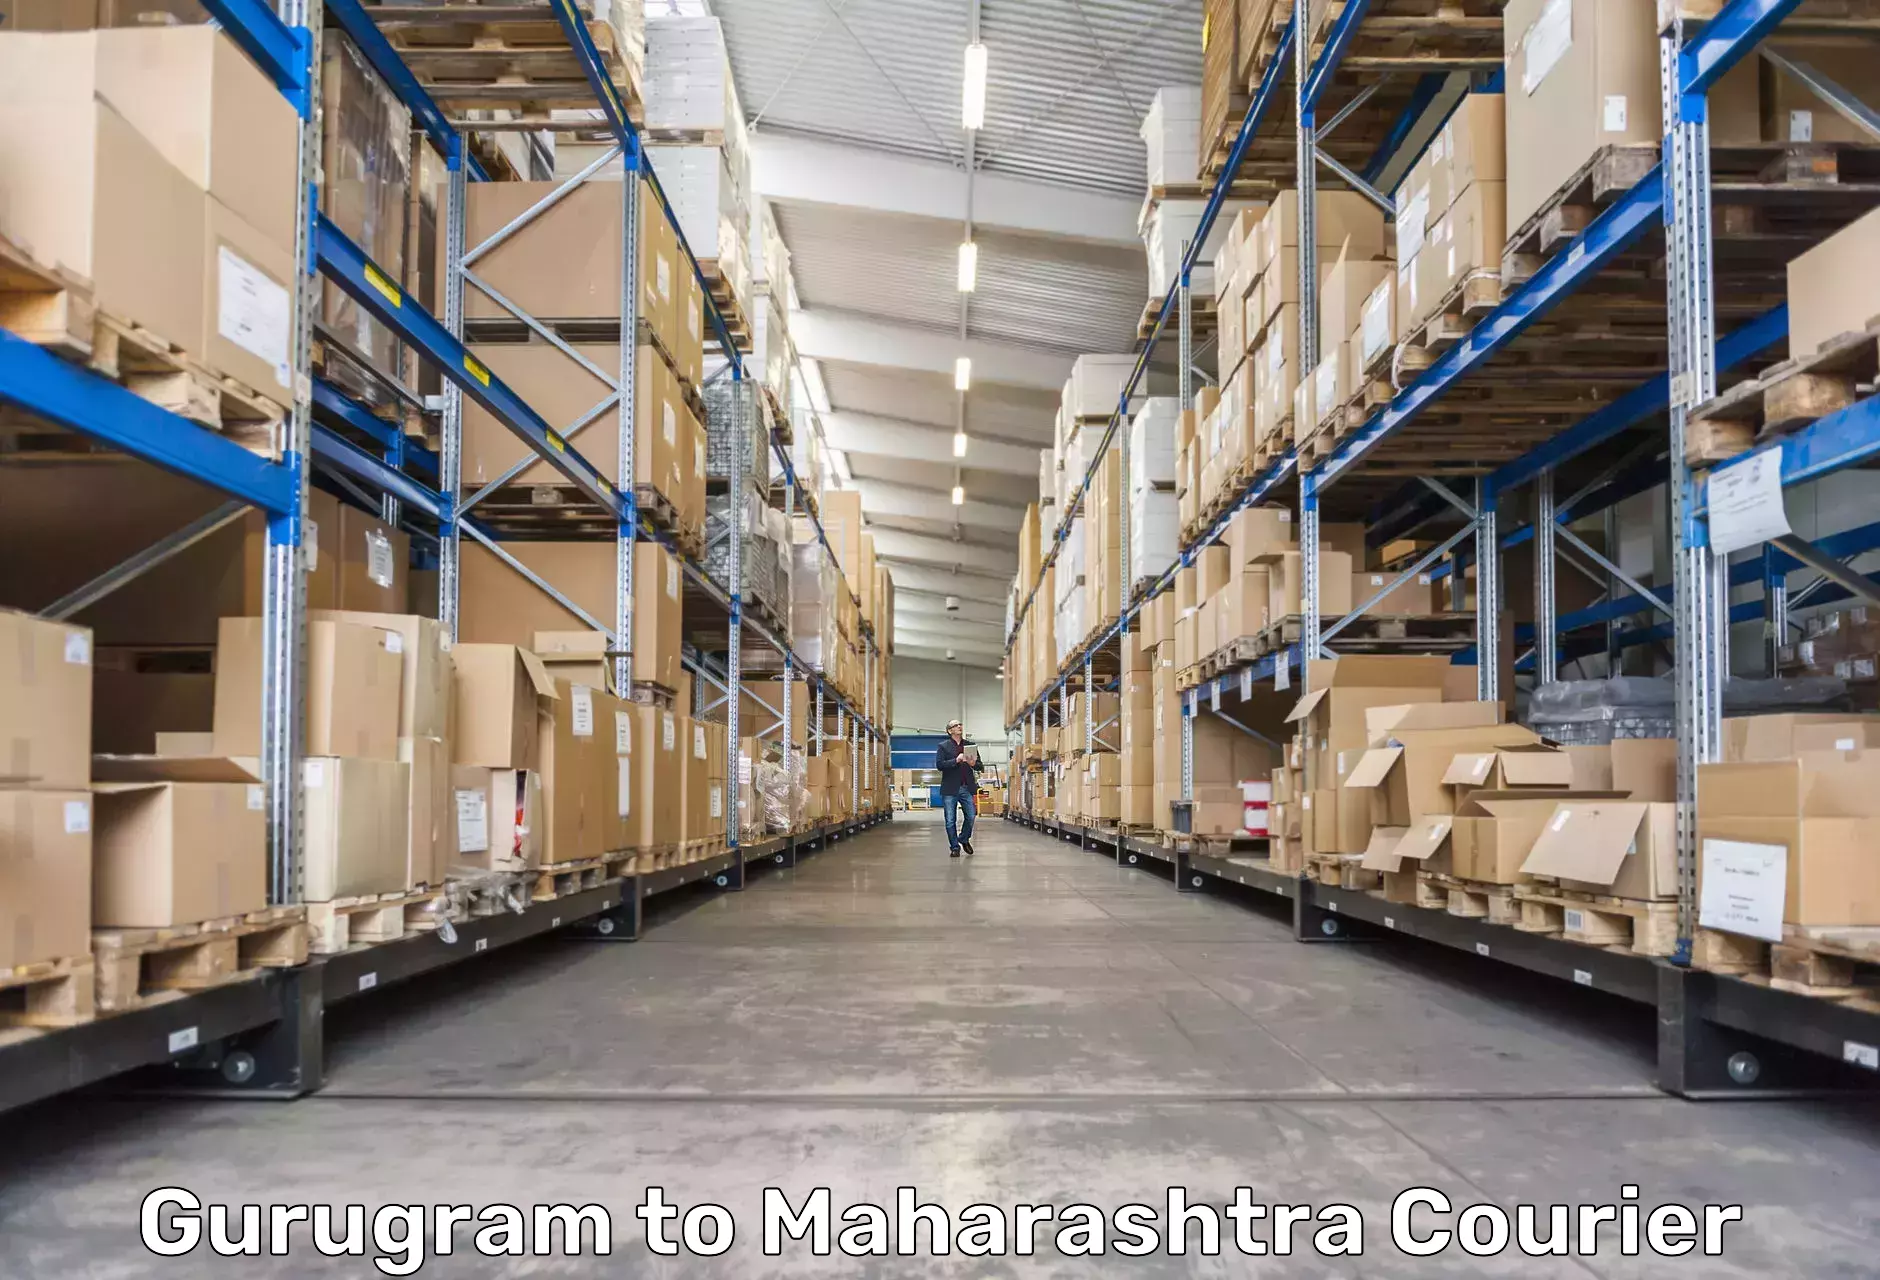 Courier service partnerships Gurugram to Wagholi